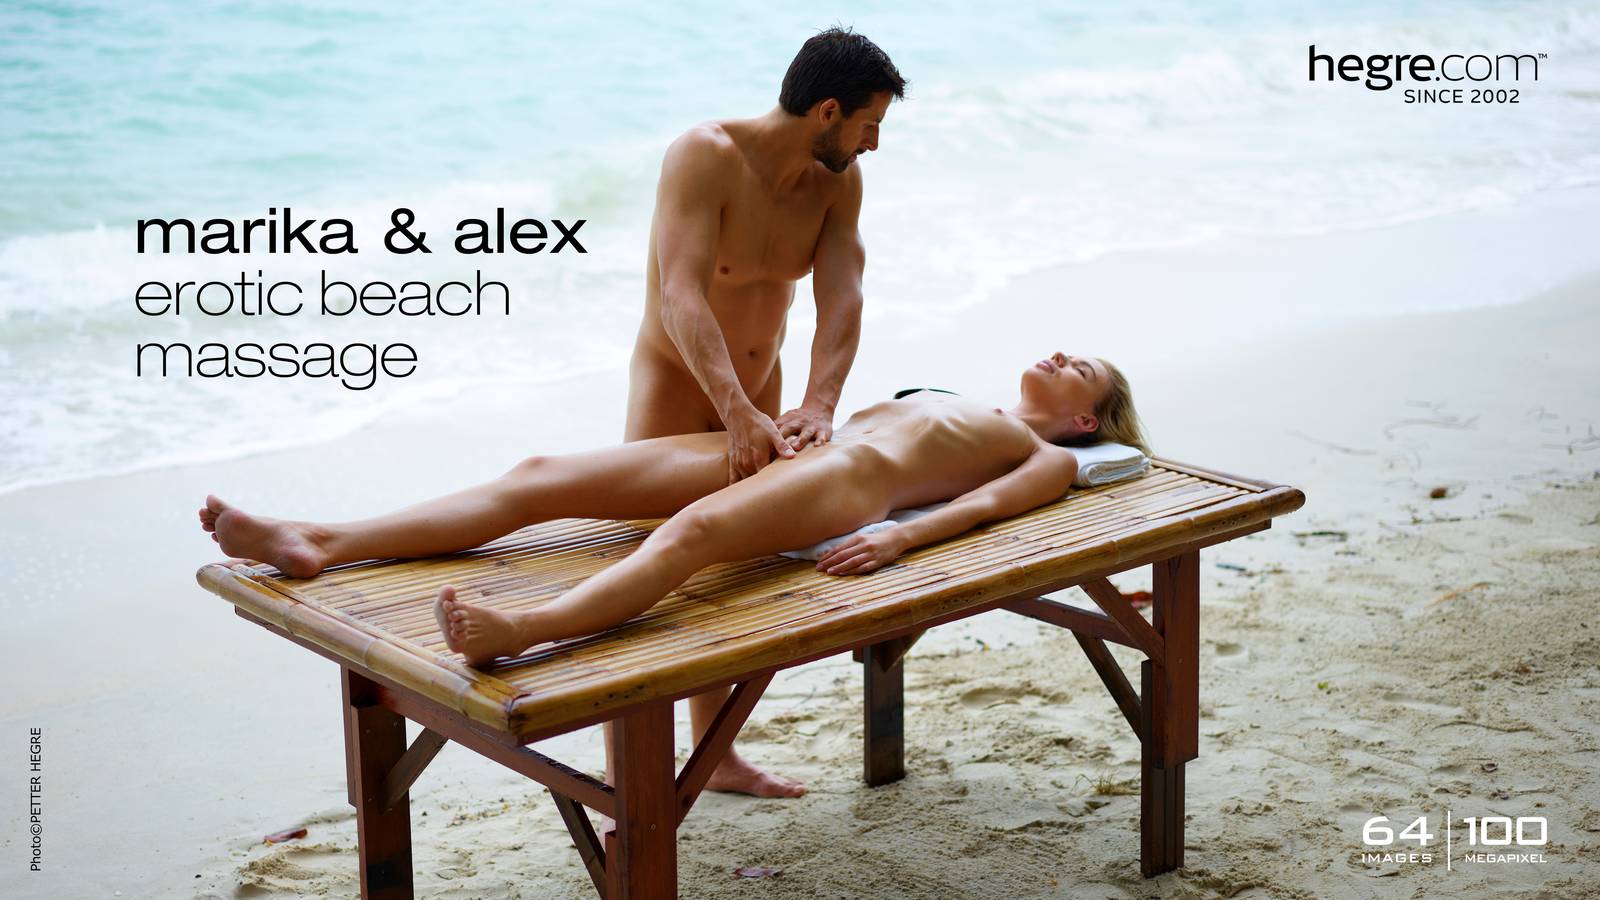 Marika and Alex erotic beach massage pic